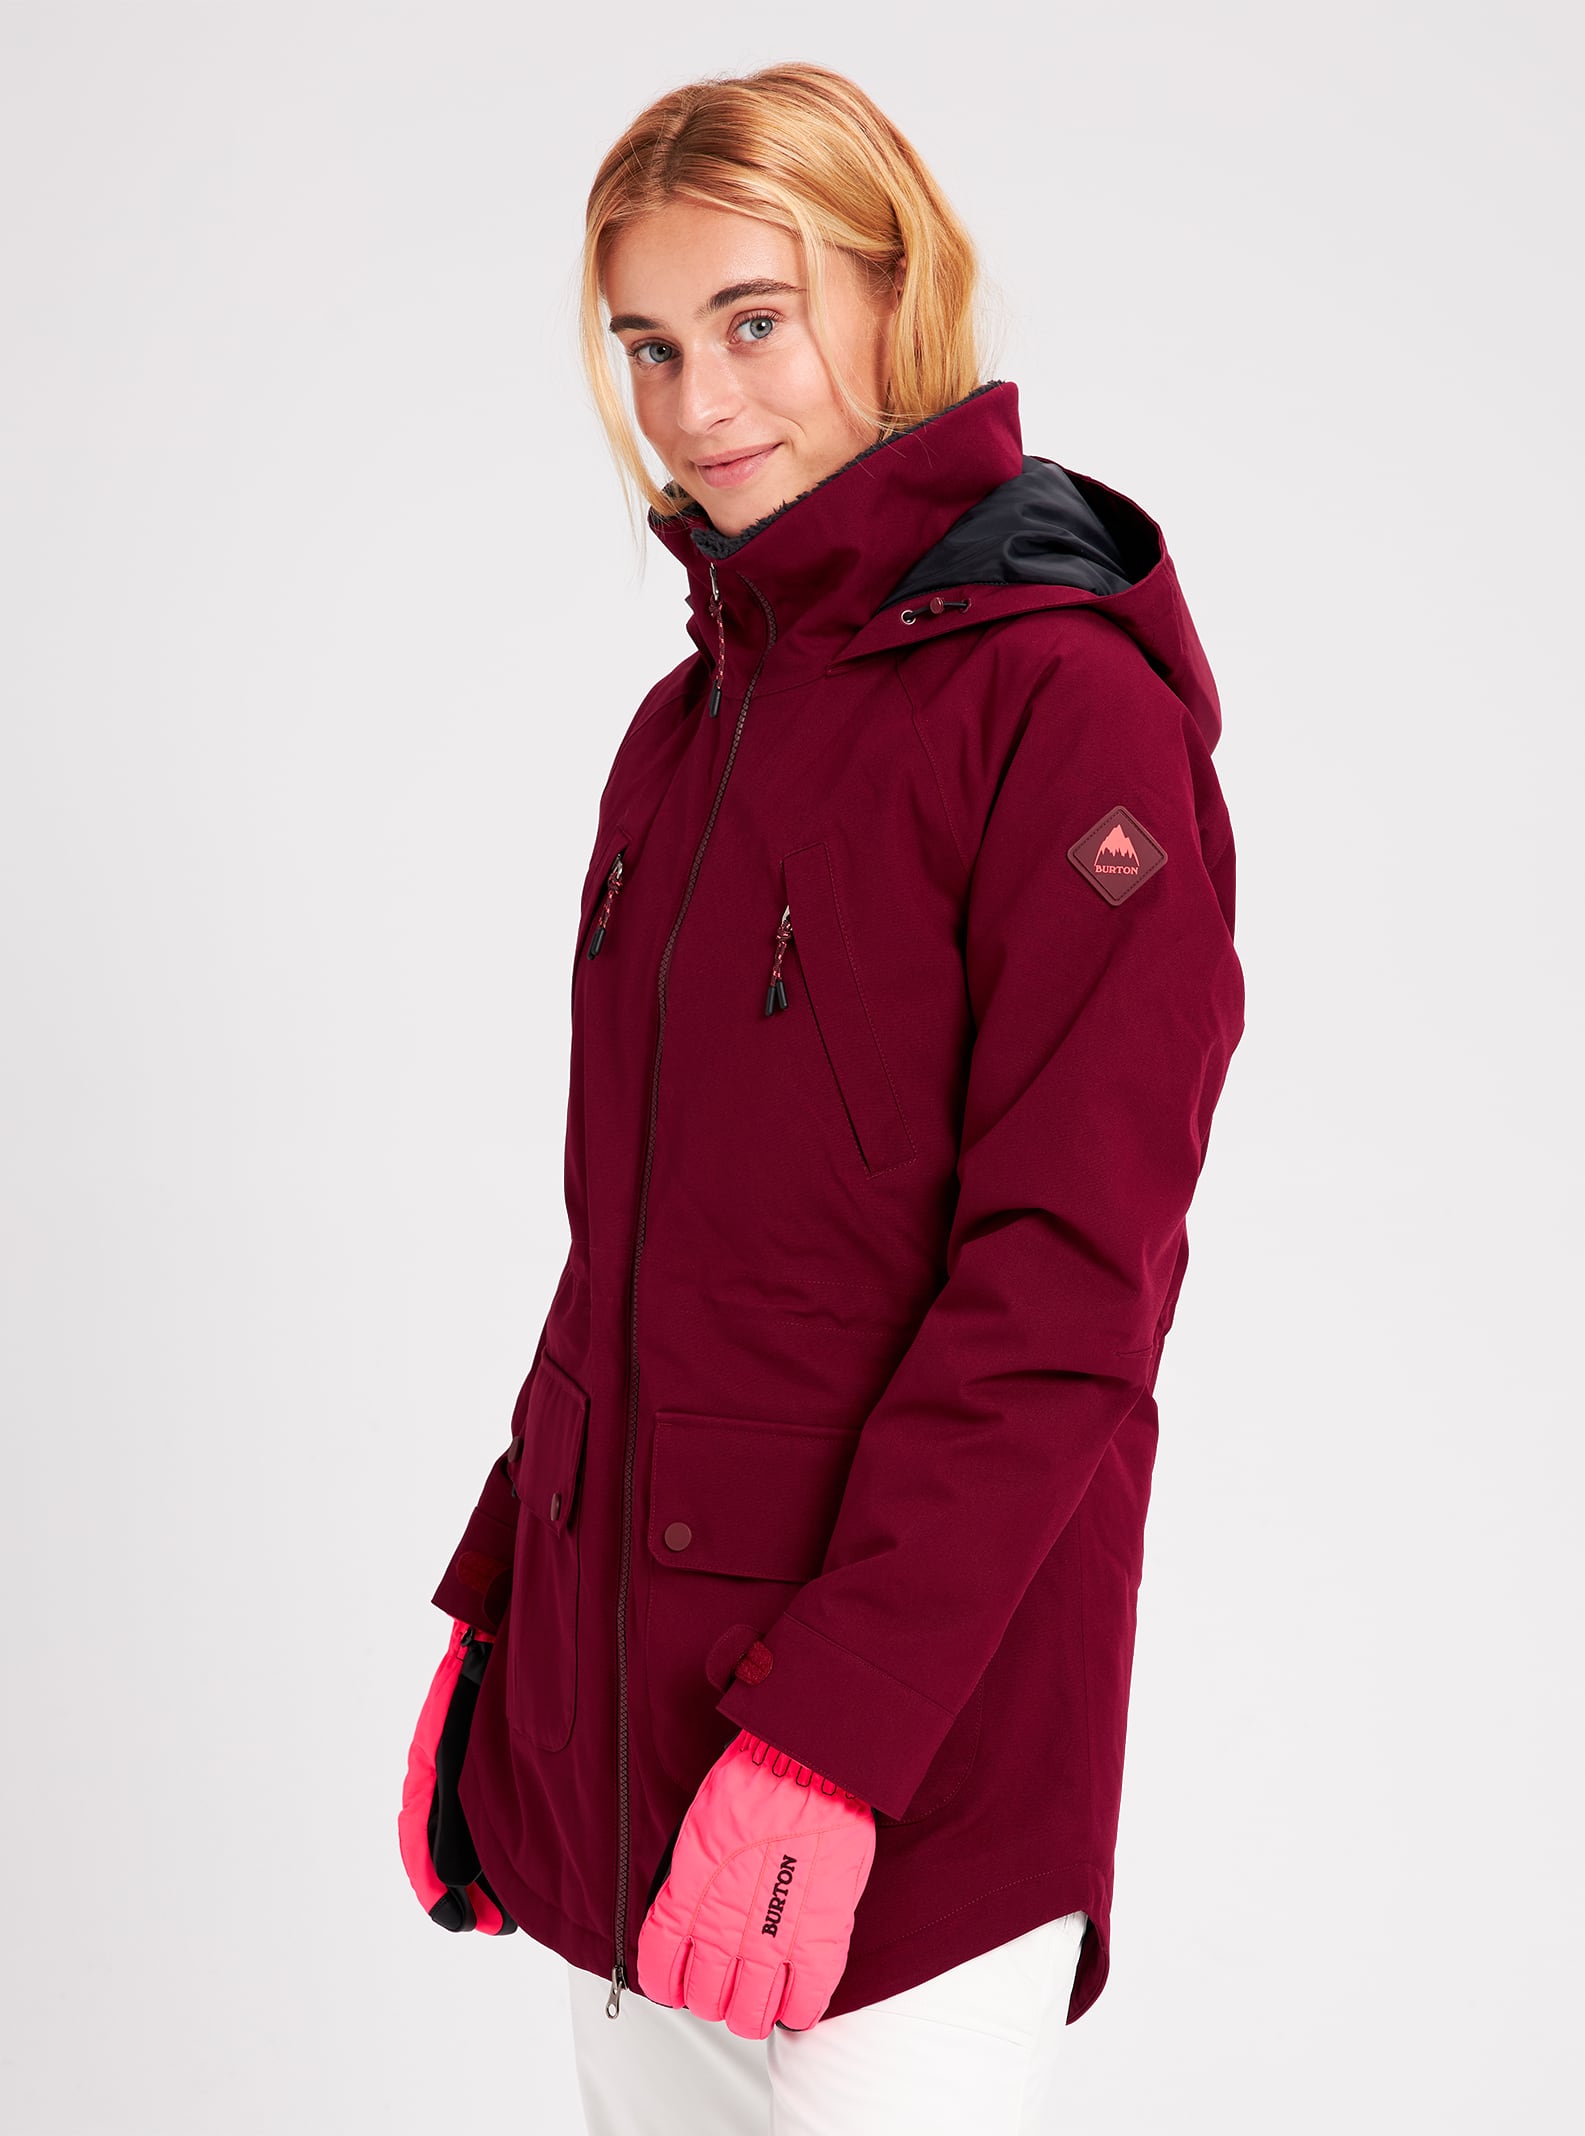 Women's Snow Jackets | Burton Snowboards AT